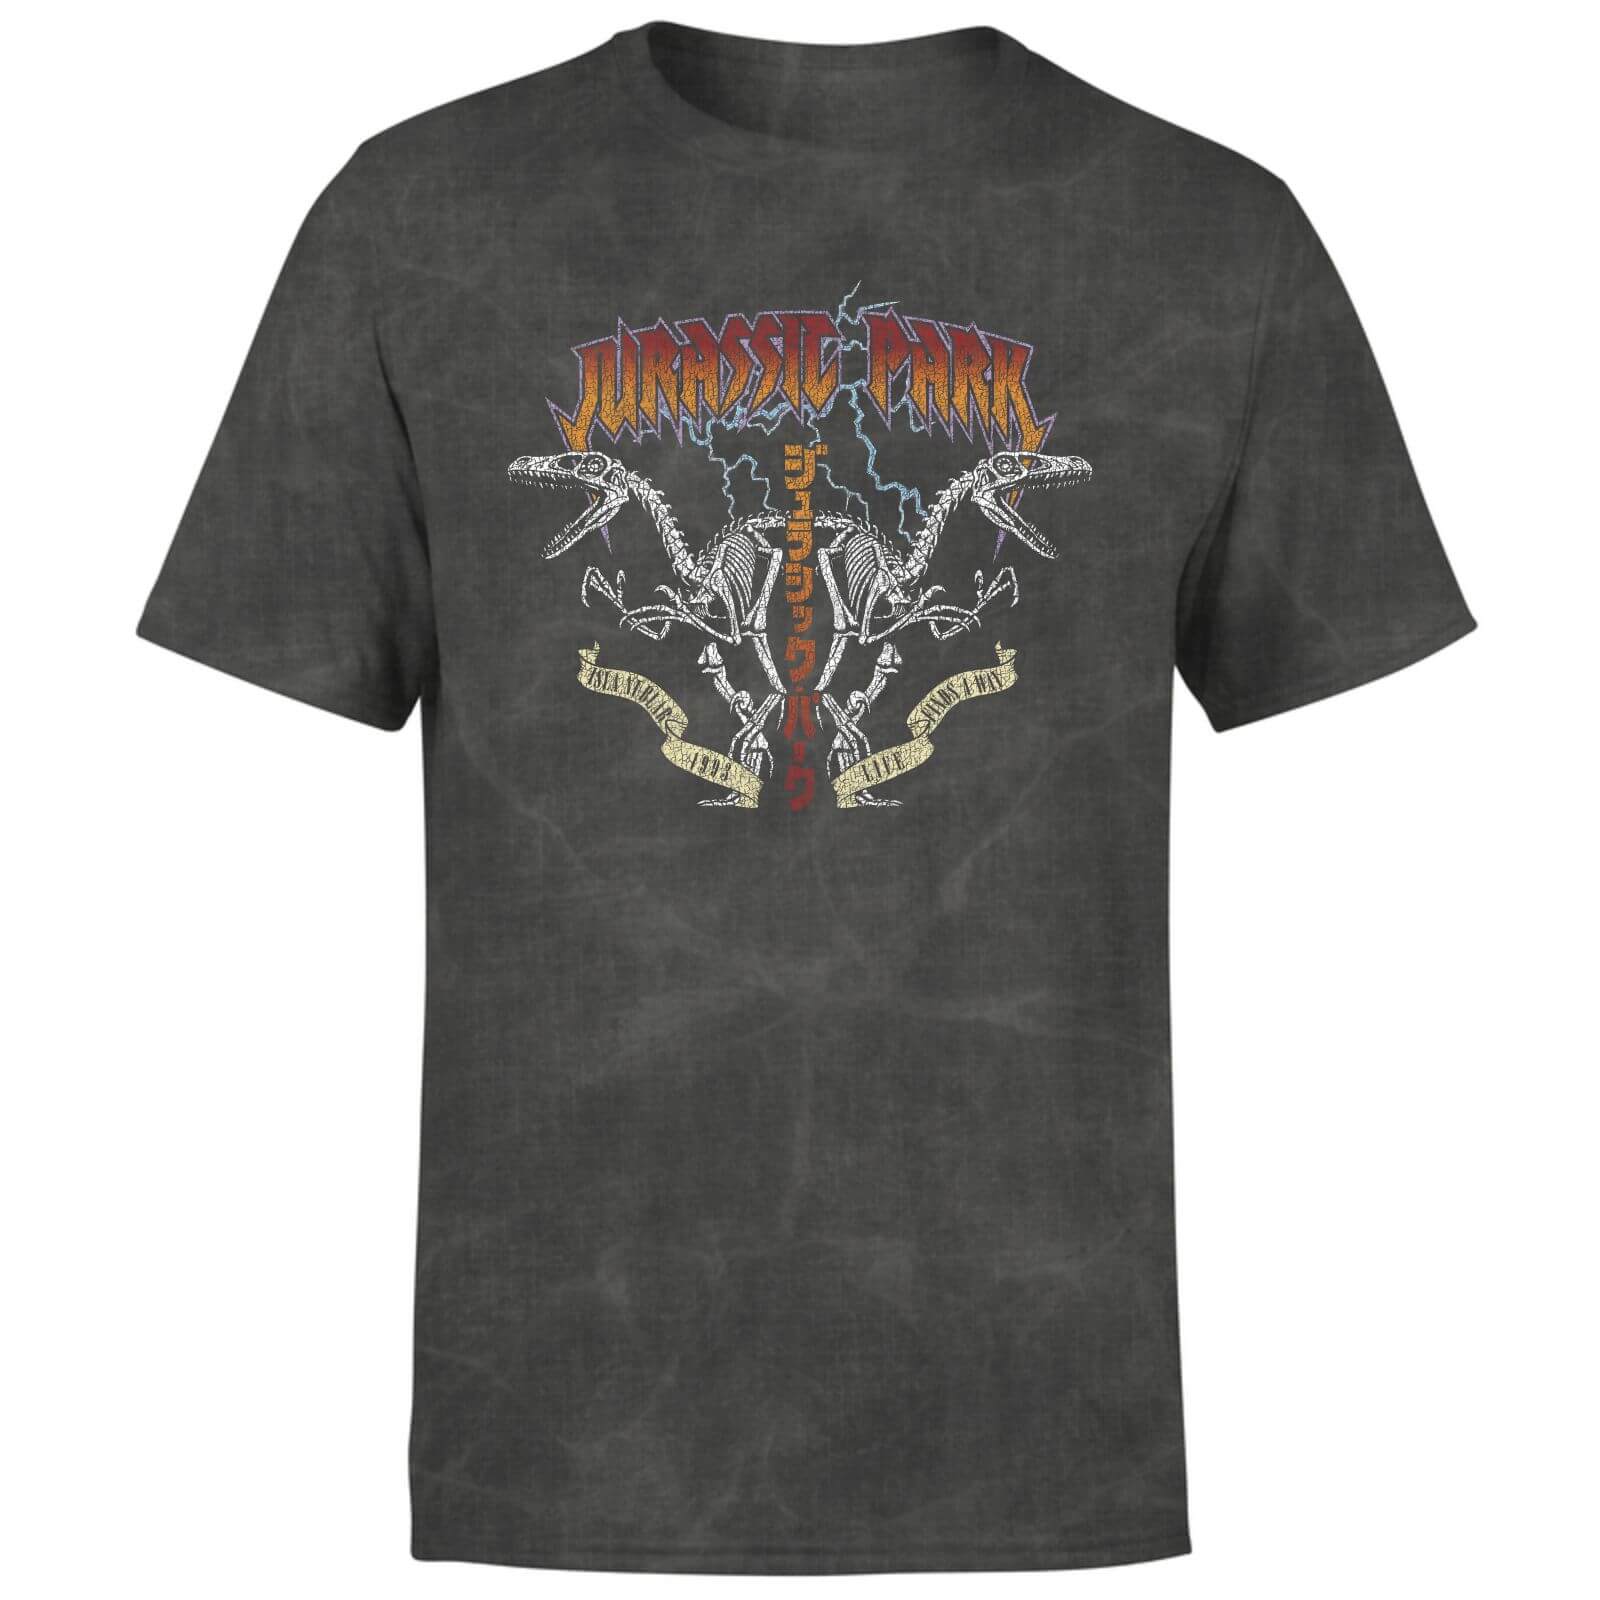 Jurassic Park Raptor Twinz Unisex T-Shirt - Black Acid Wash - S